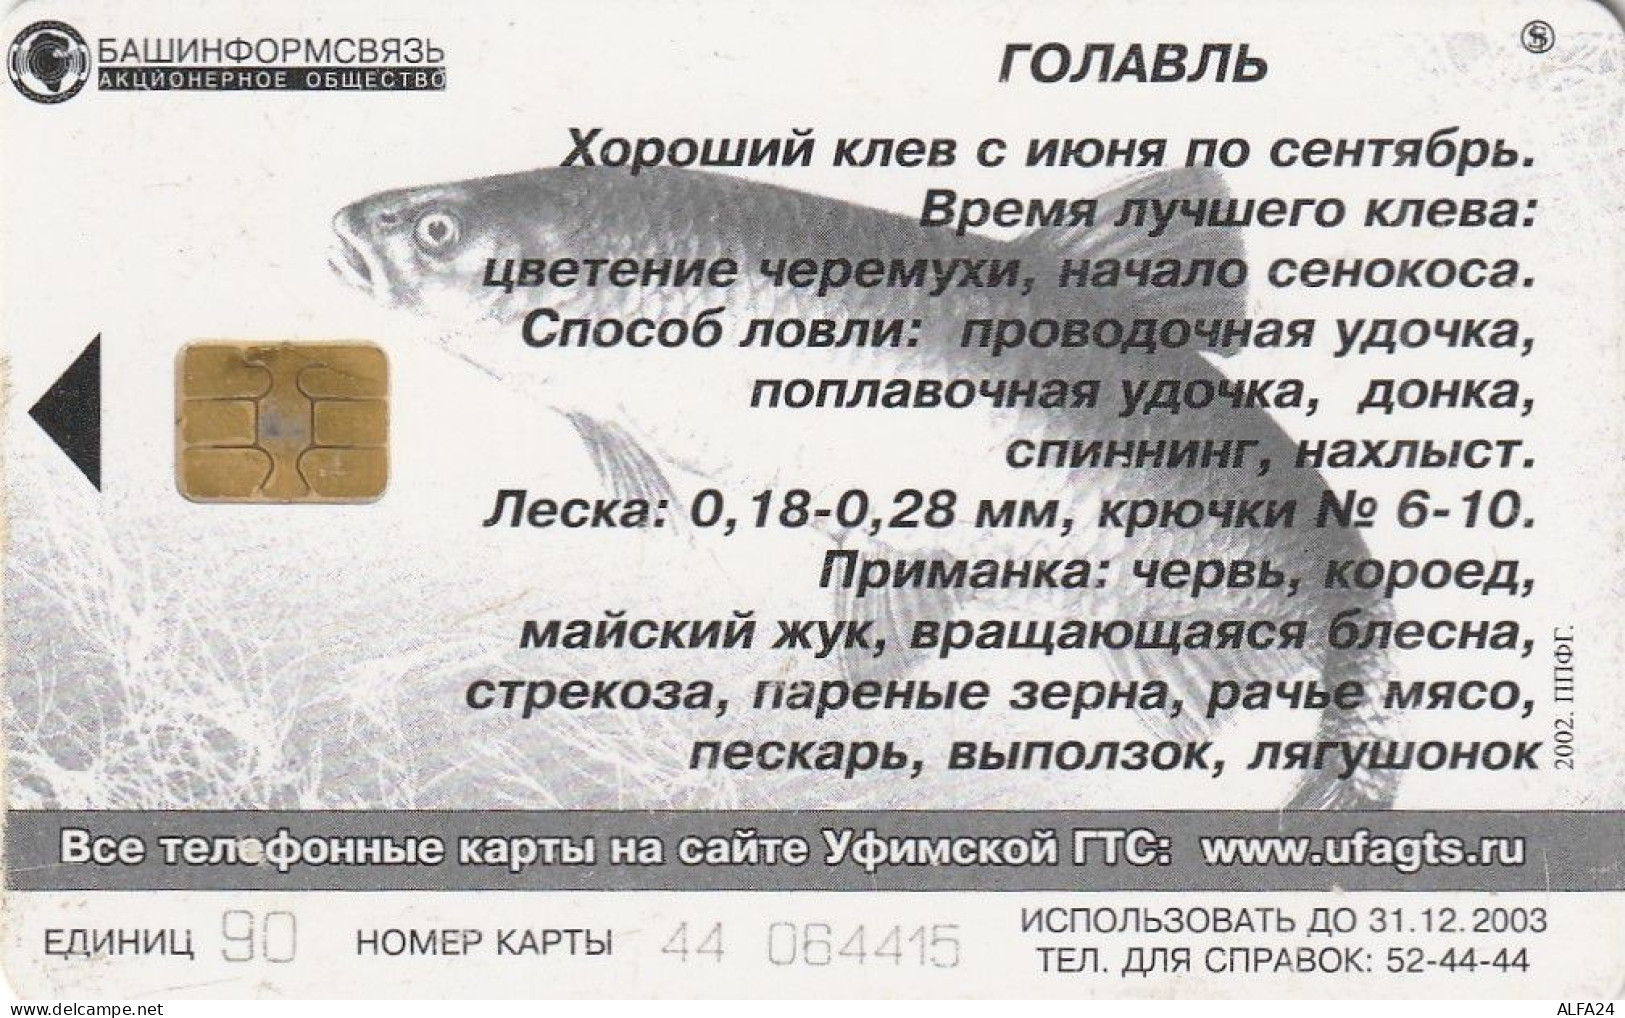 PHONE CARD RUSSIA Bashinformsvyaz - Ufa (E100.7.5 - Russland